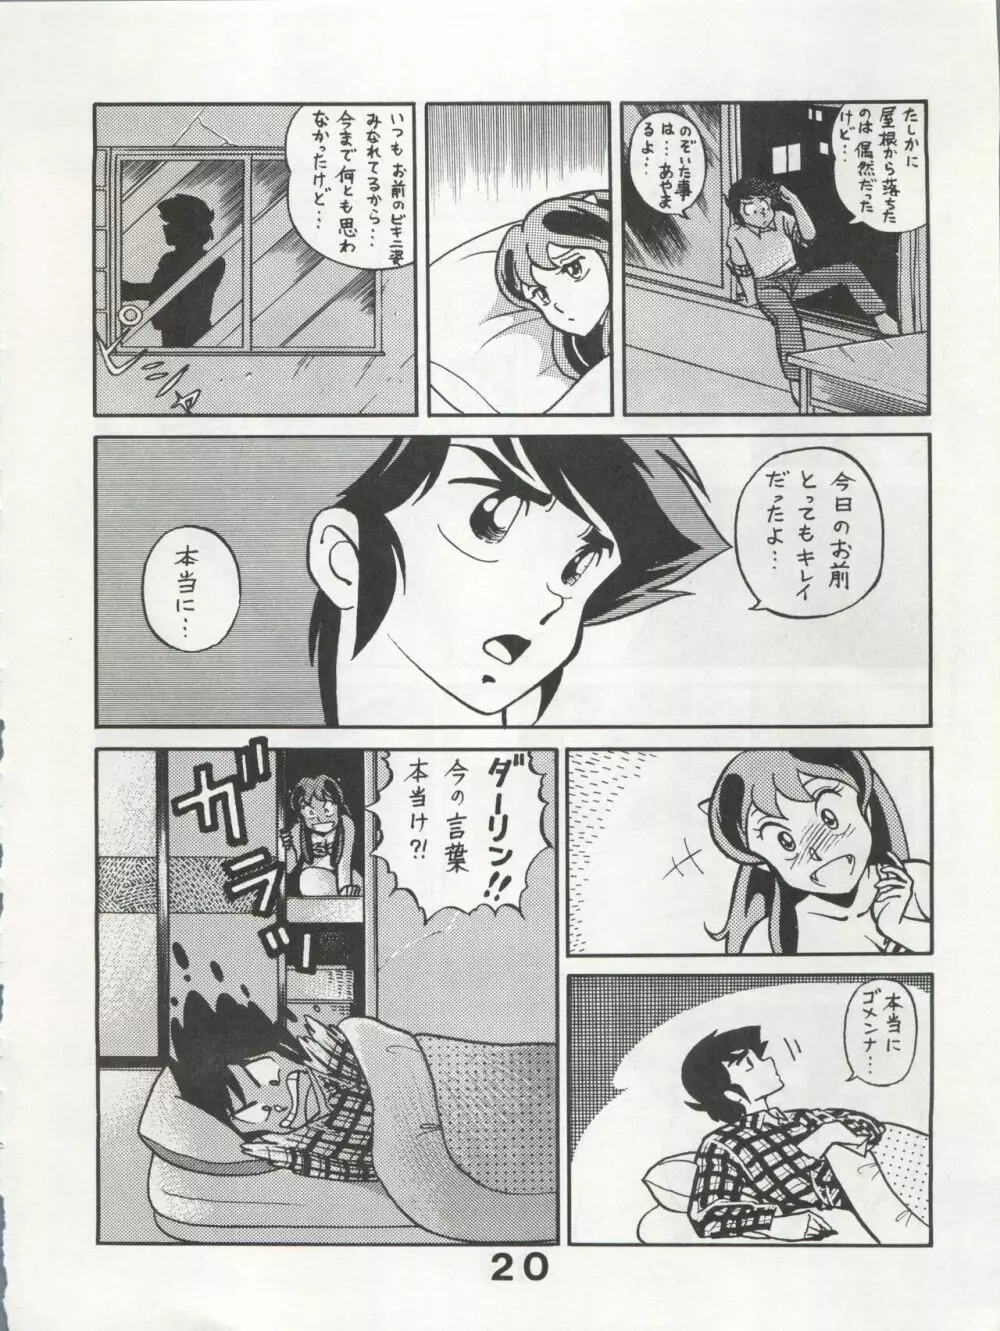 MoN MoN もんモン Vol.5 - page20